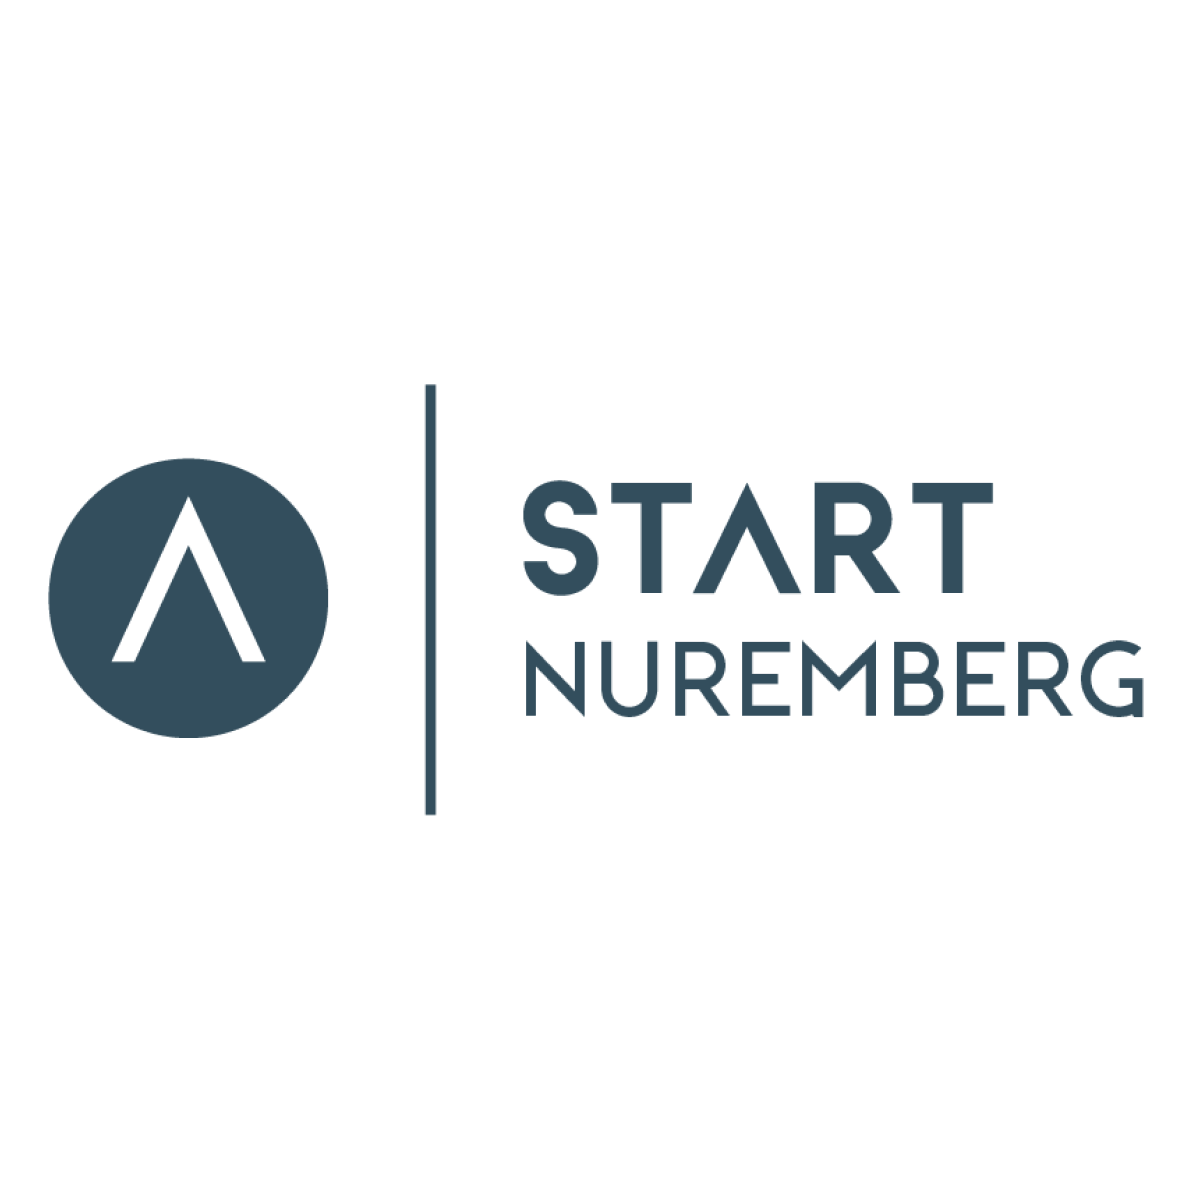 Start Nuremberg